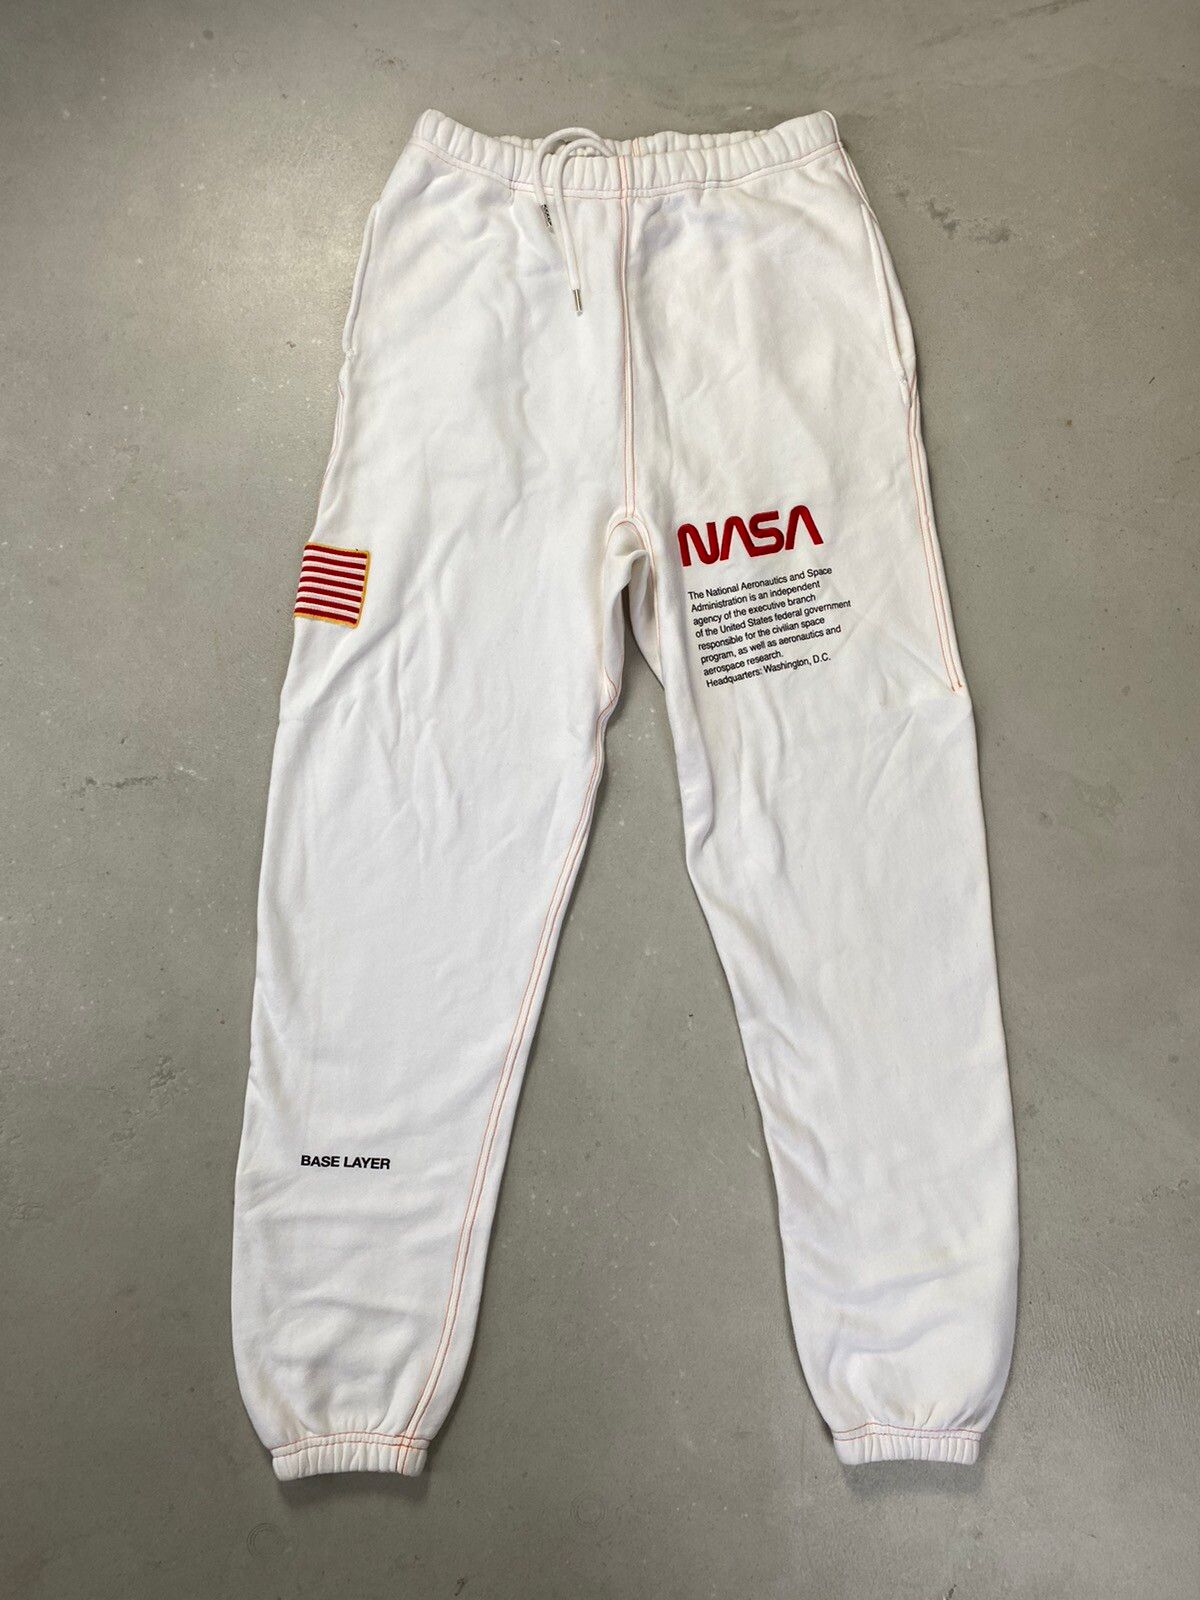 Heron Preston SS18 NASA Sweatpants in White